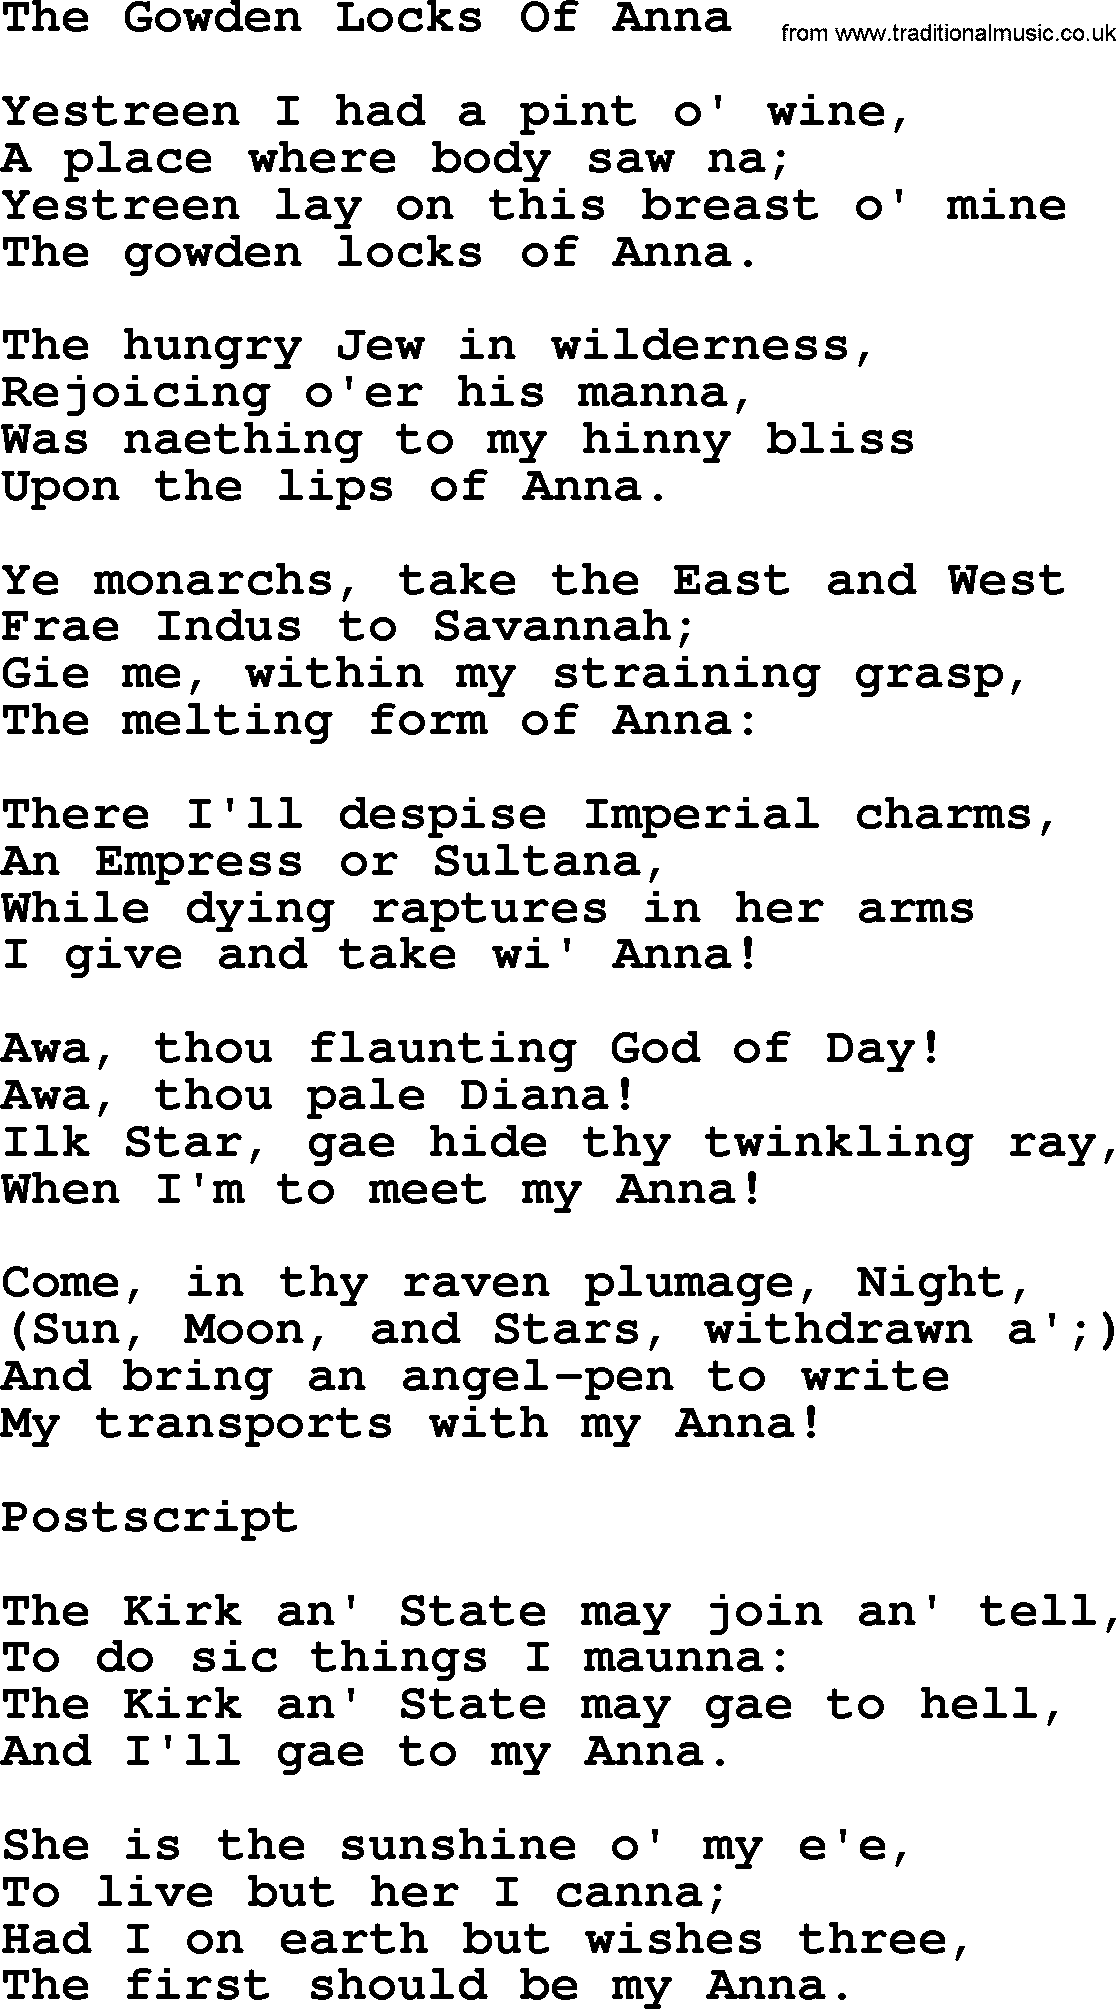 Robert Burns Songs & Lyrics: The Gowden Locks Of Anna